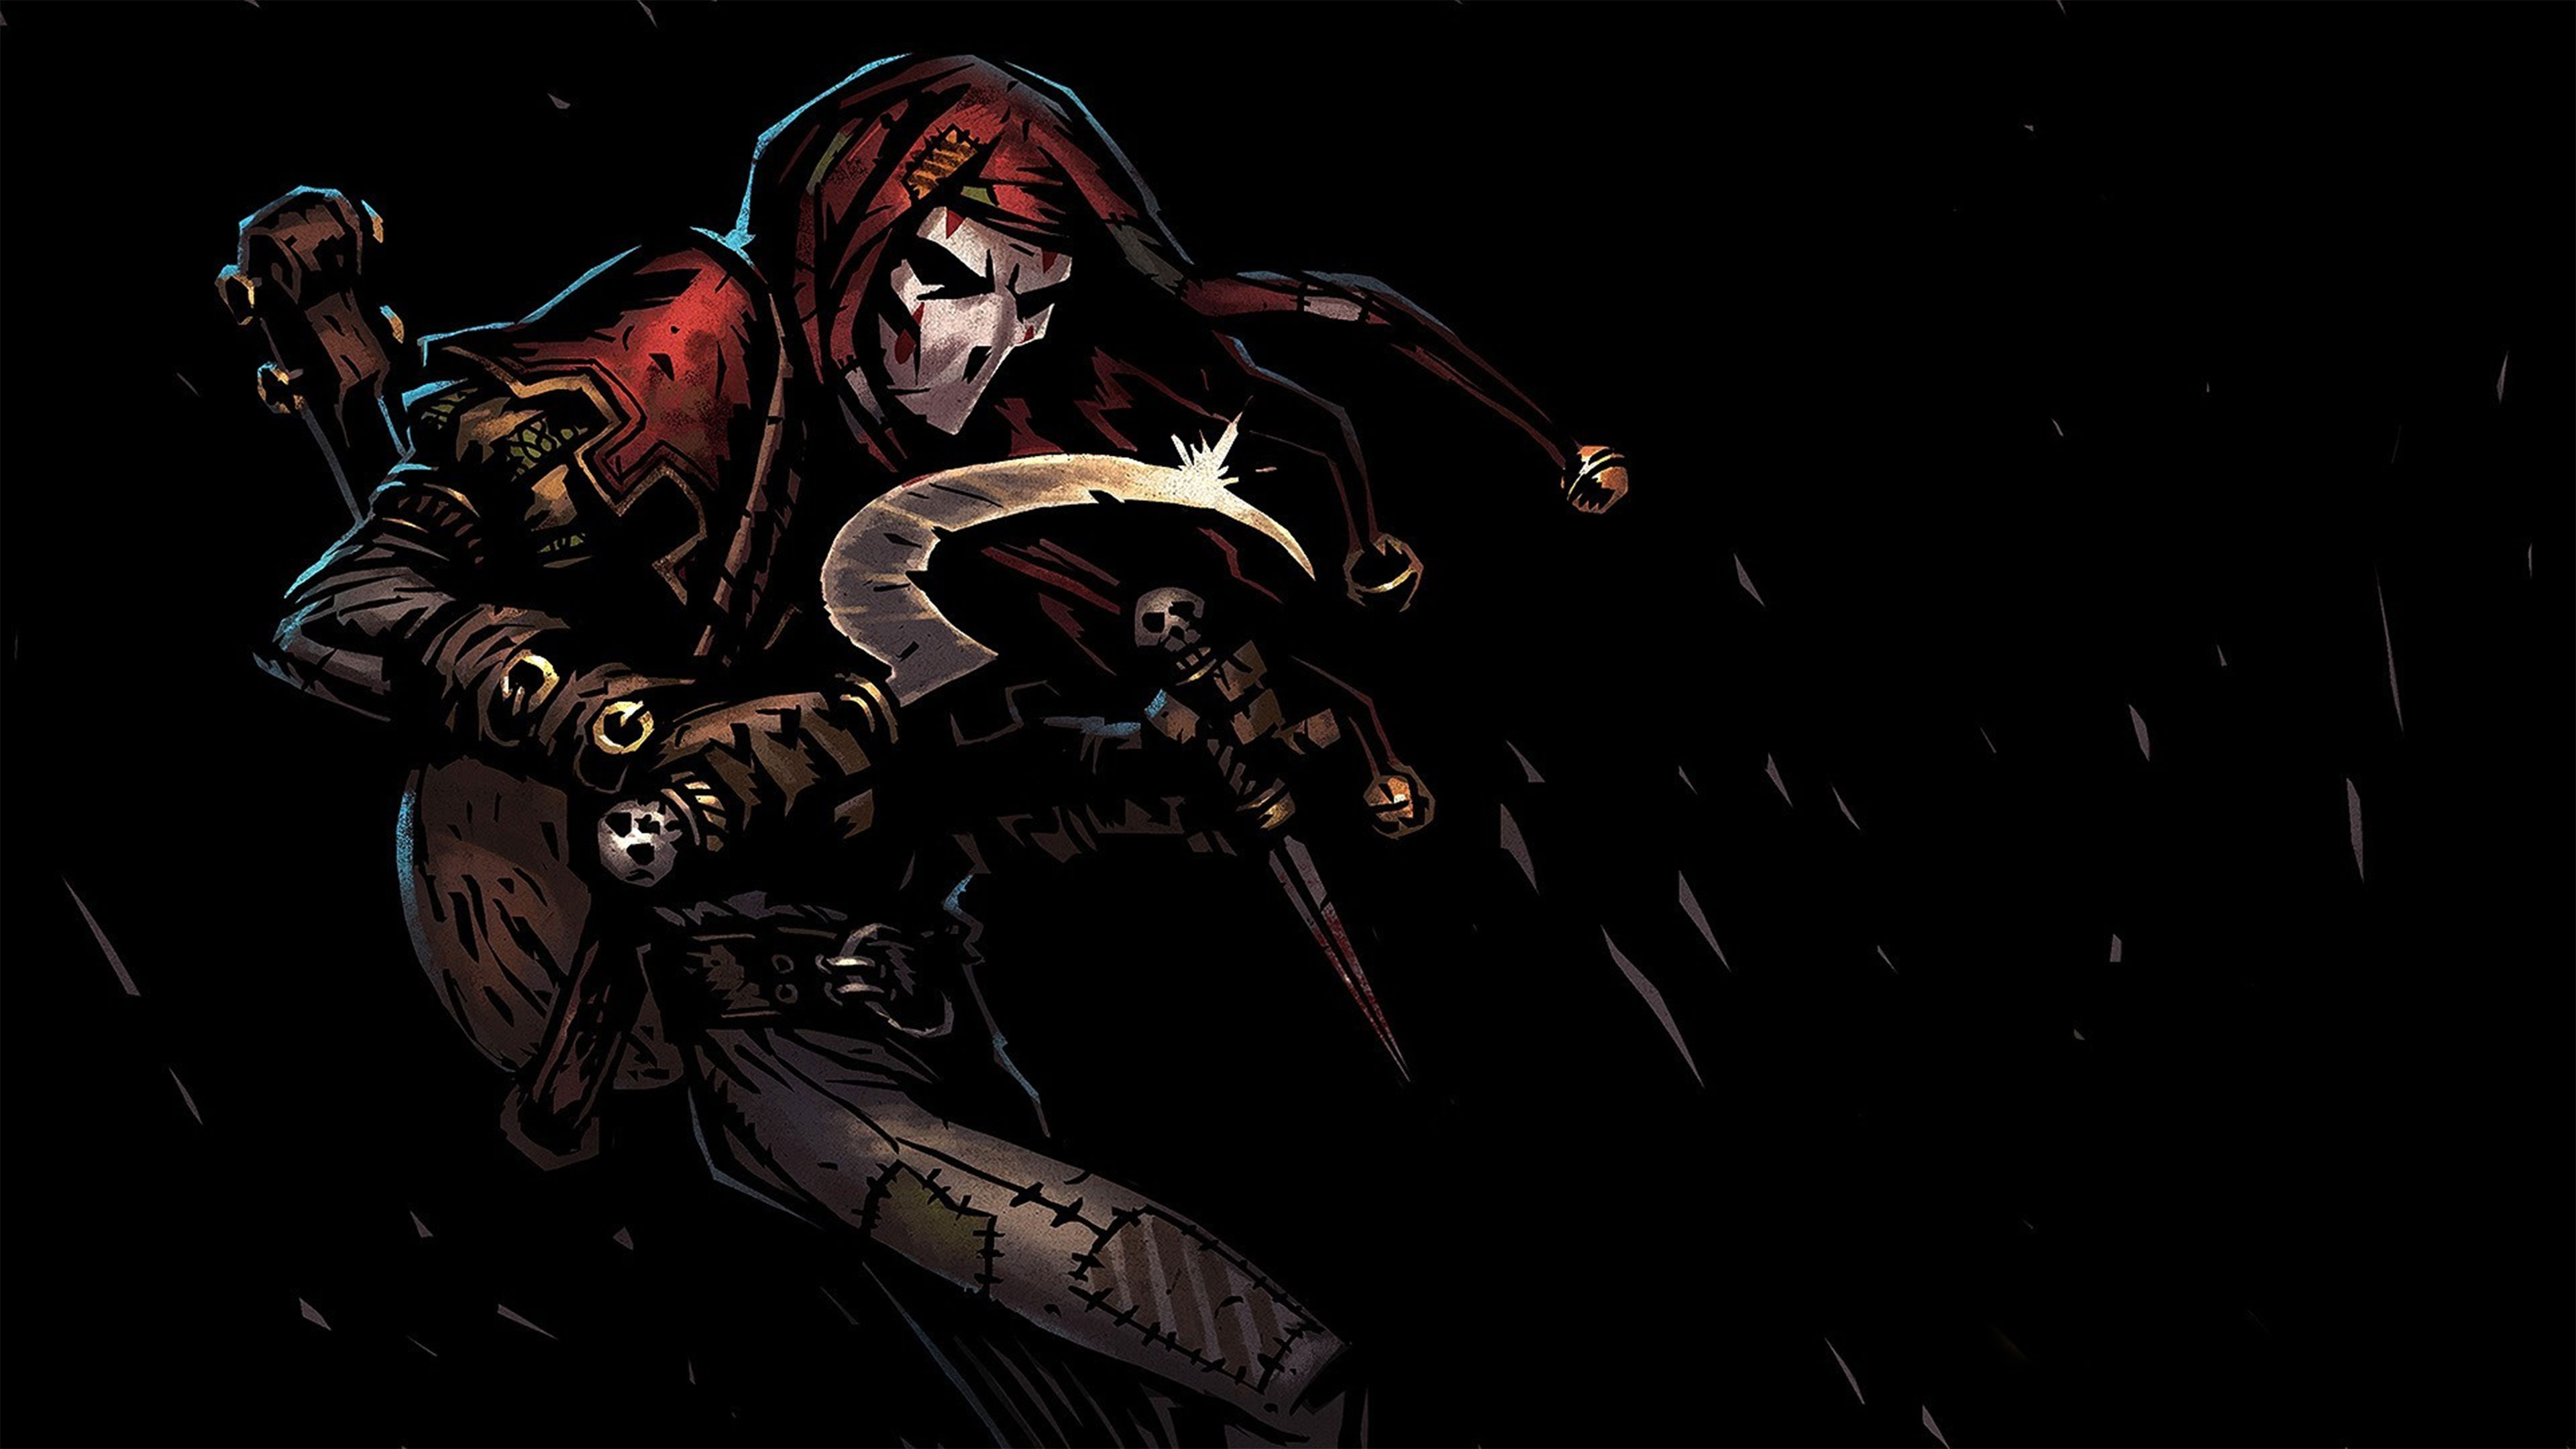 darkest dungeon wallpaper,fictional character,cg artwork,darkness,illustration,supervillain